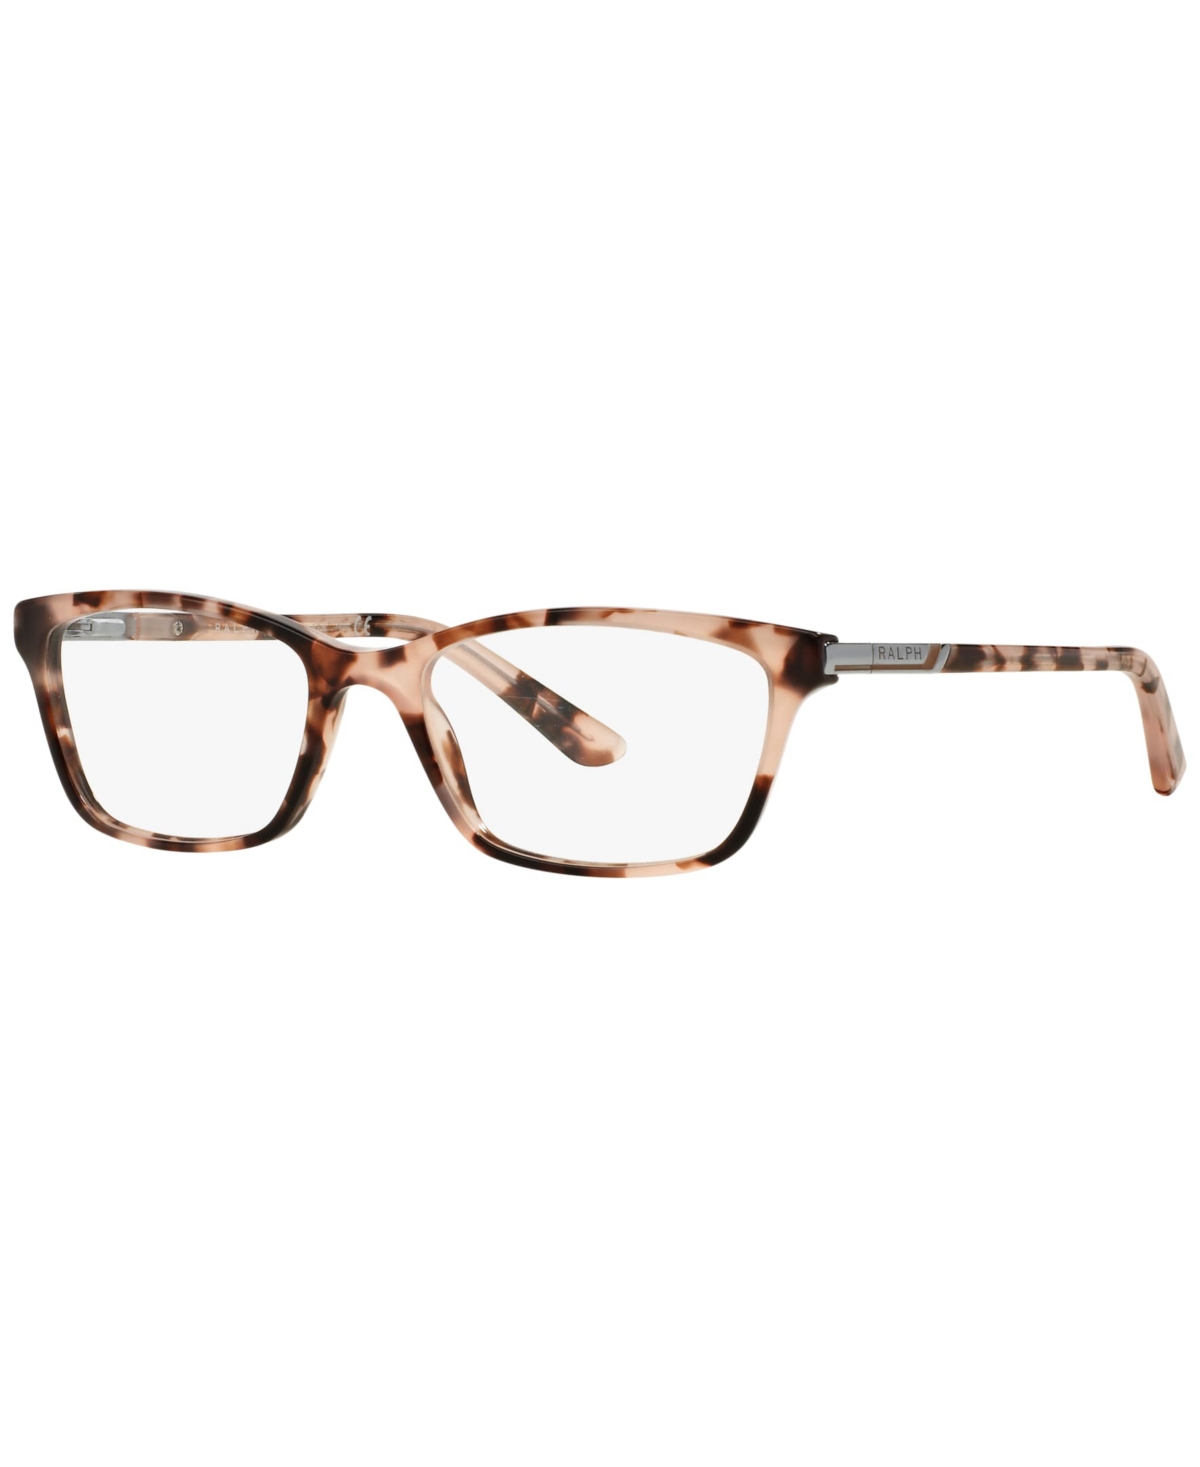 Women's Eyeglasses, RA7044 - Pink Tortoise